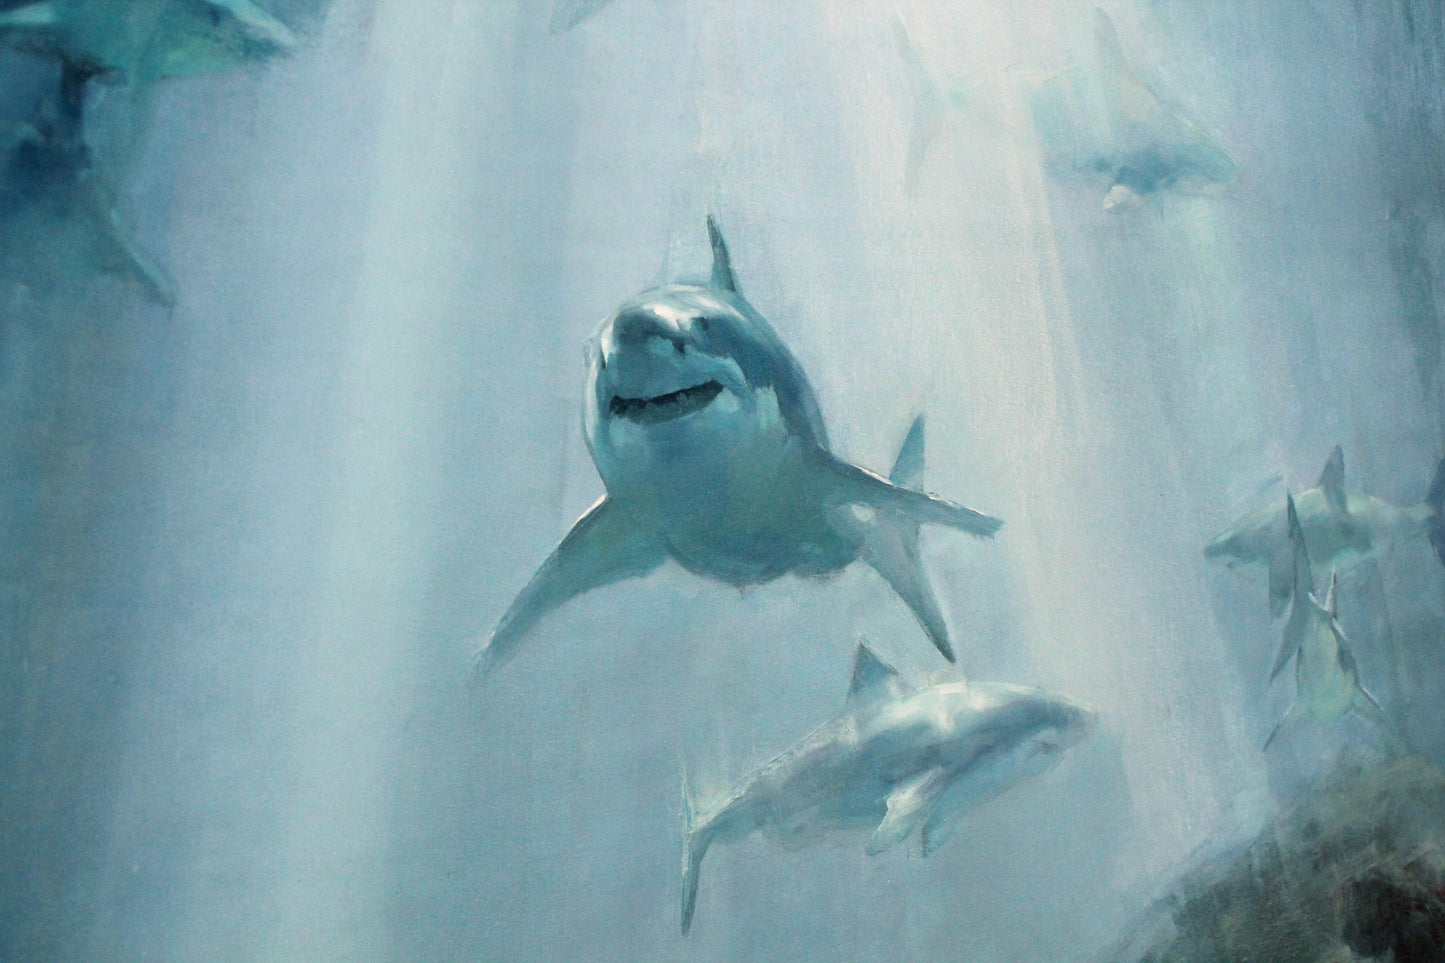 Great white shark original oil painting